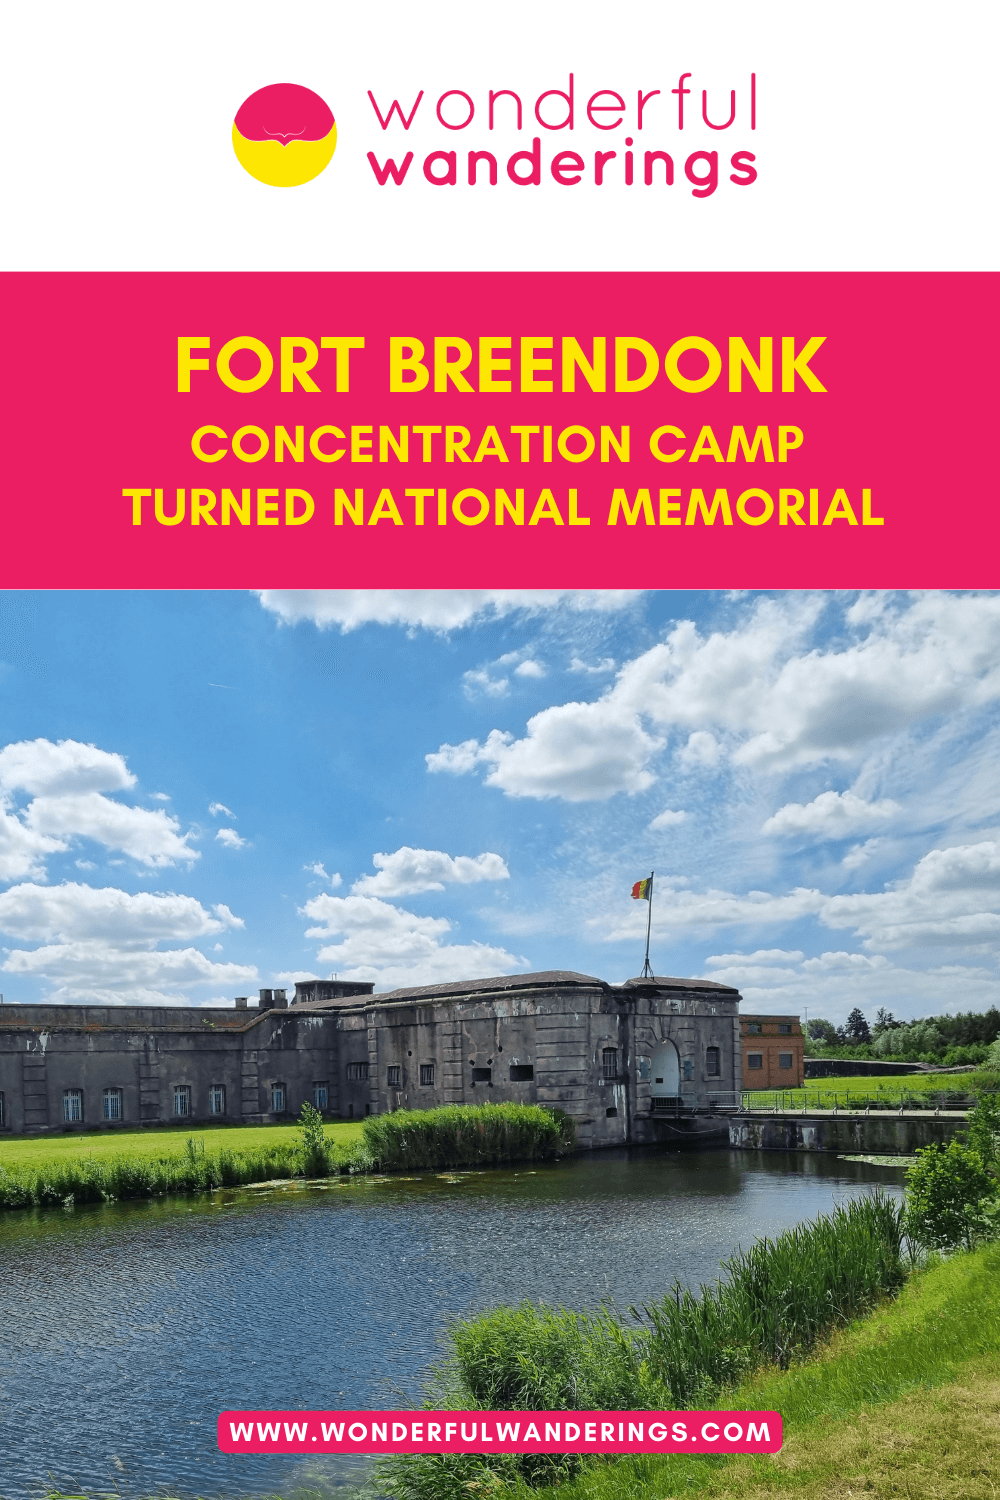 Fort Breendonk Pinterest image